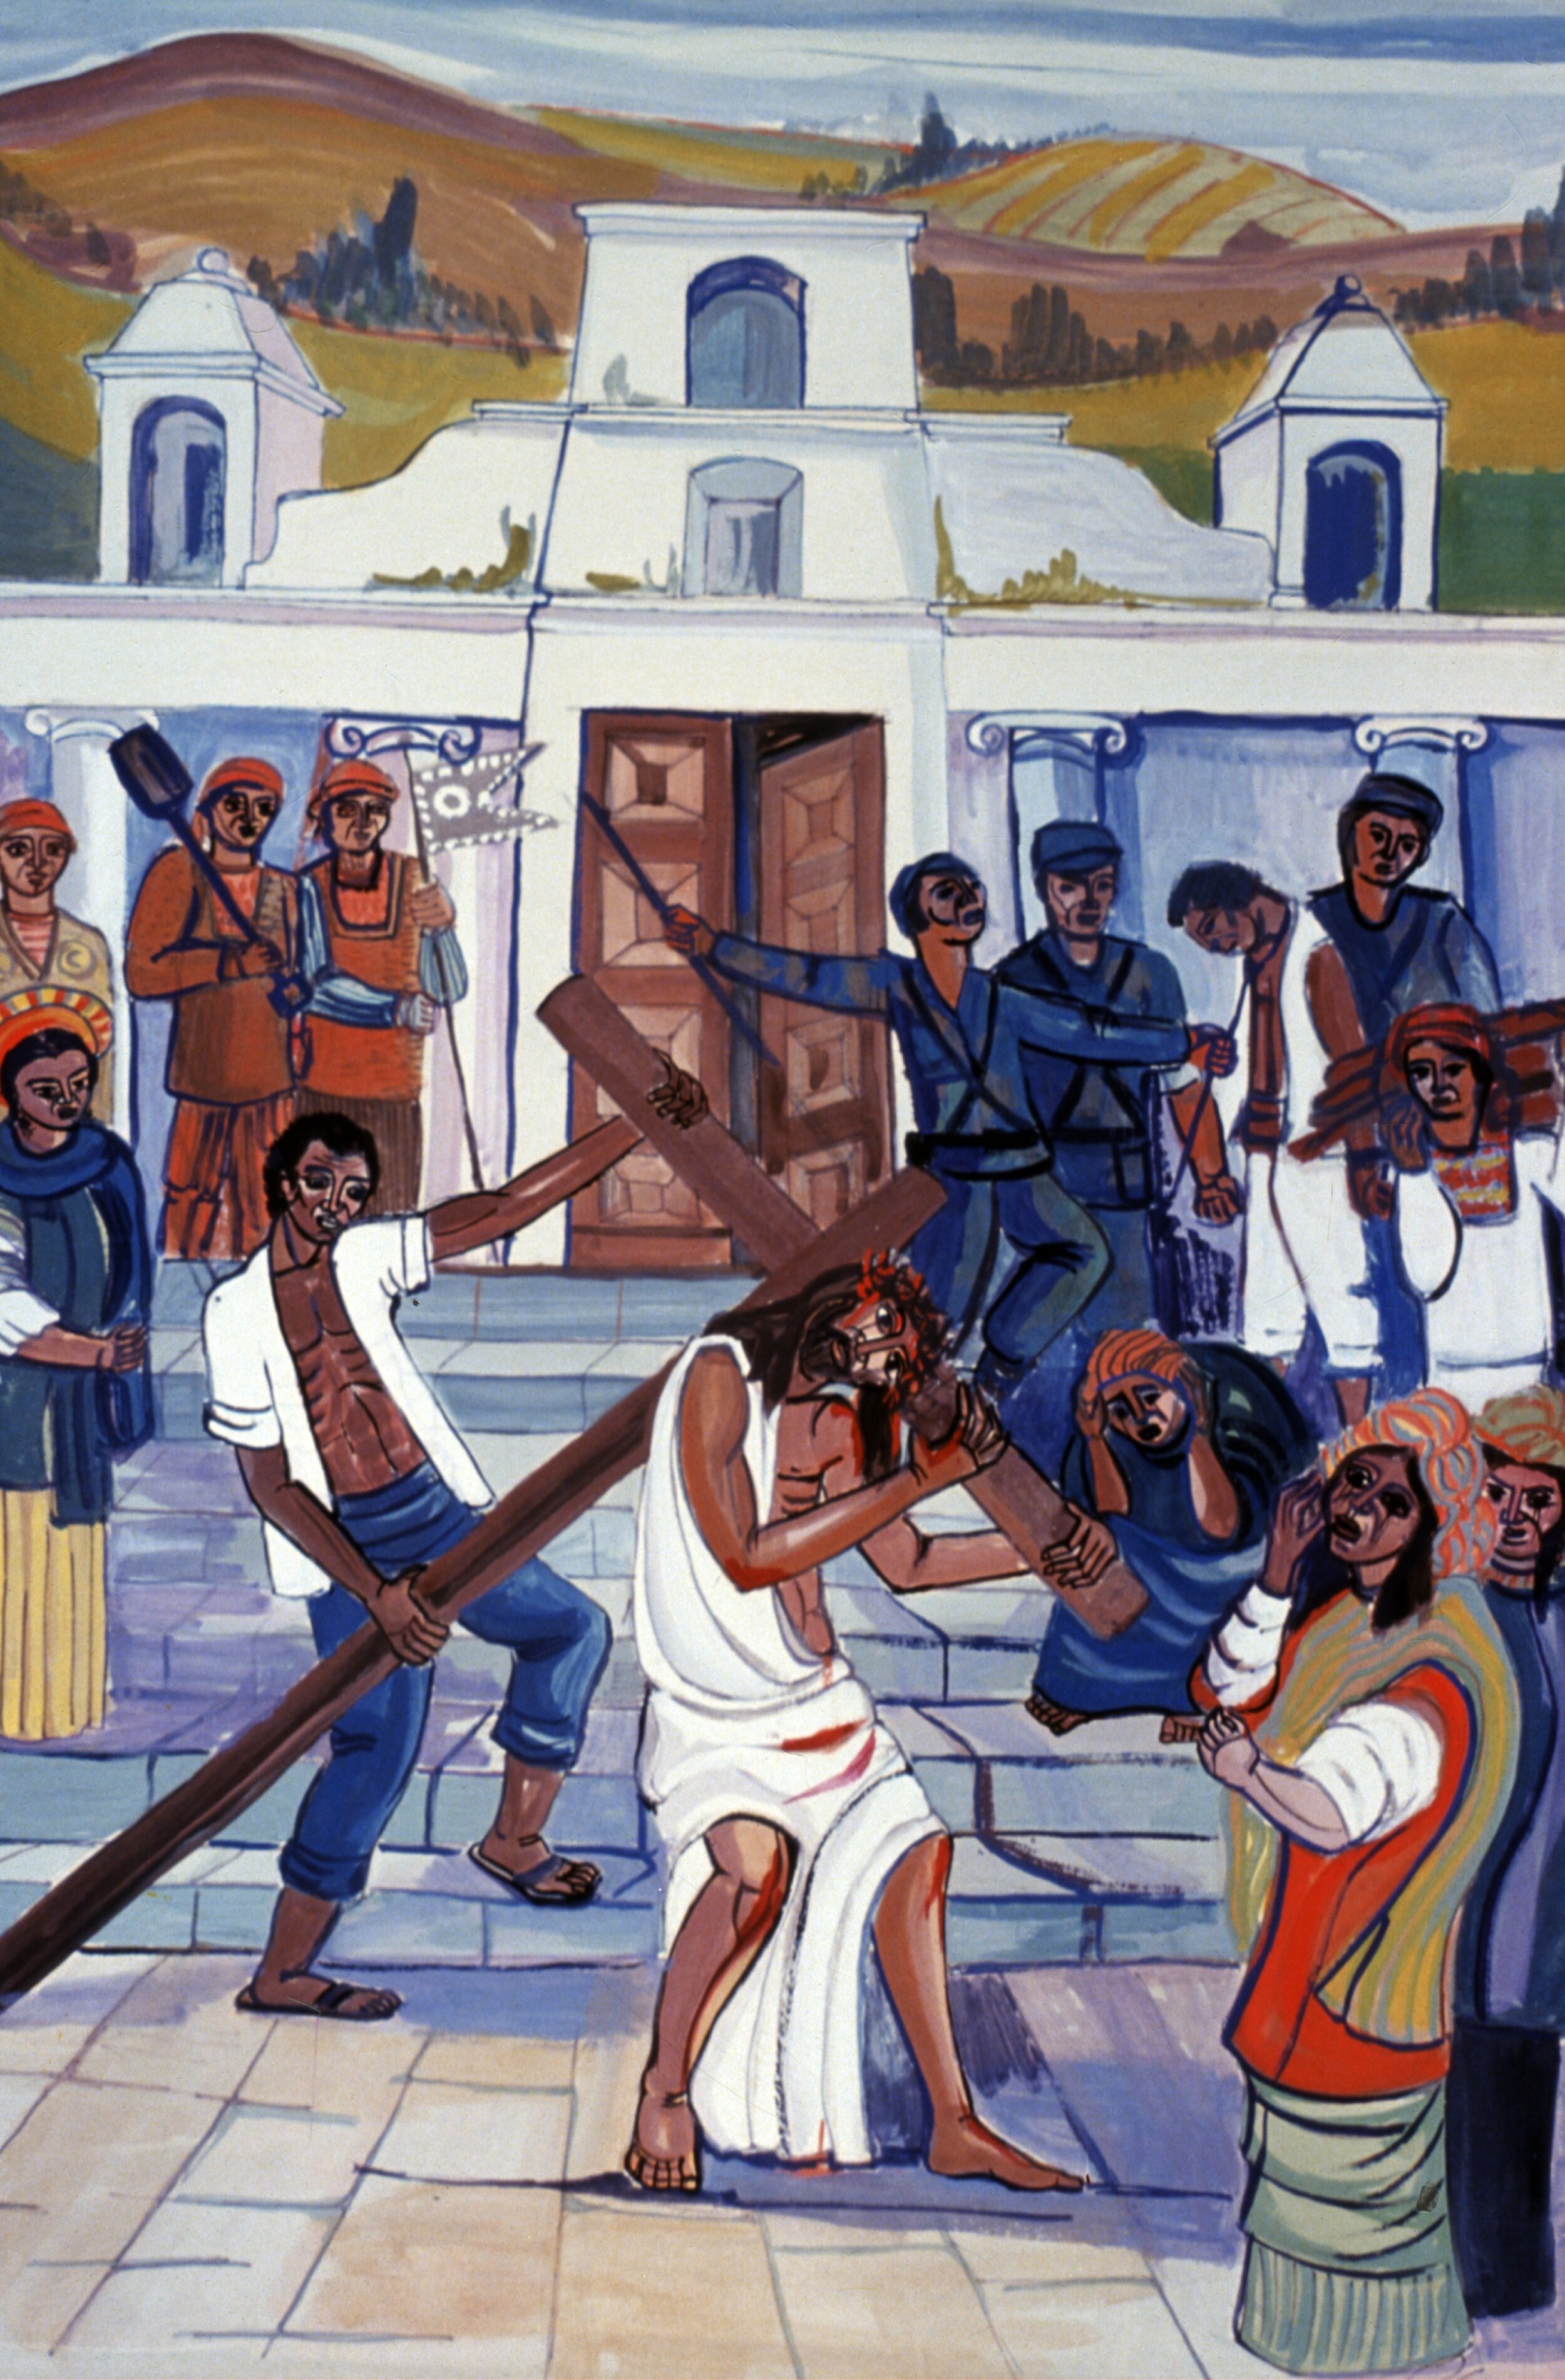 5. Simon of Cyrene helps Jesus carry the Cross